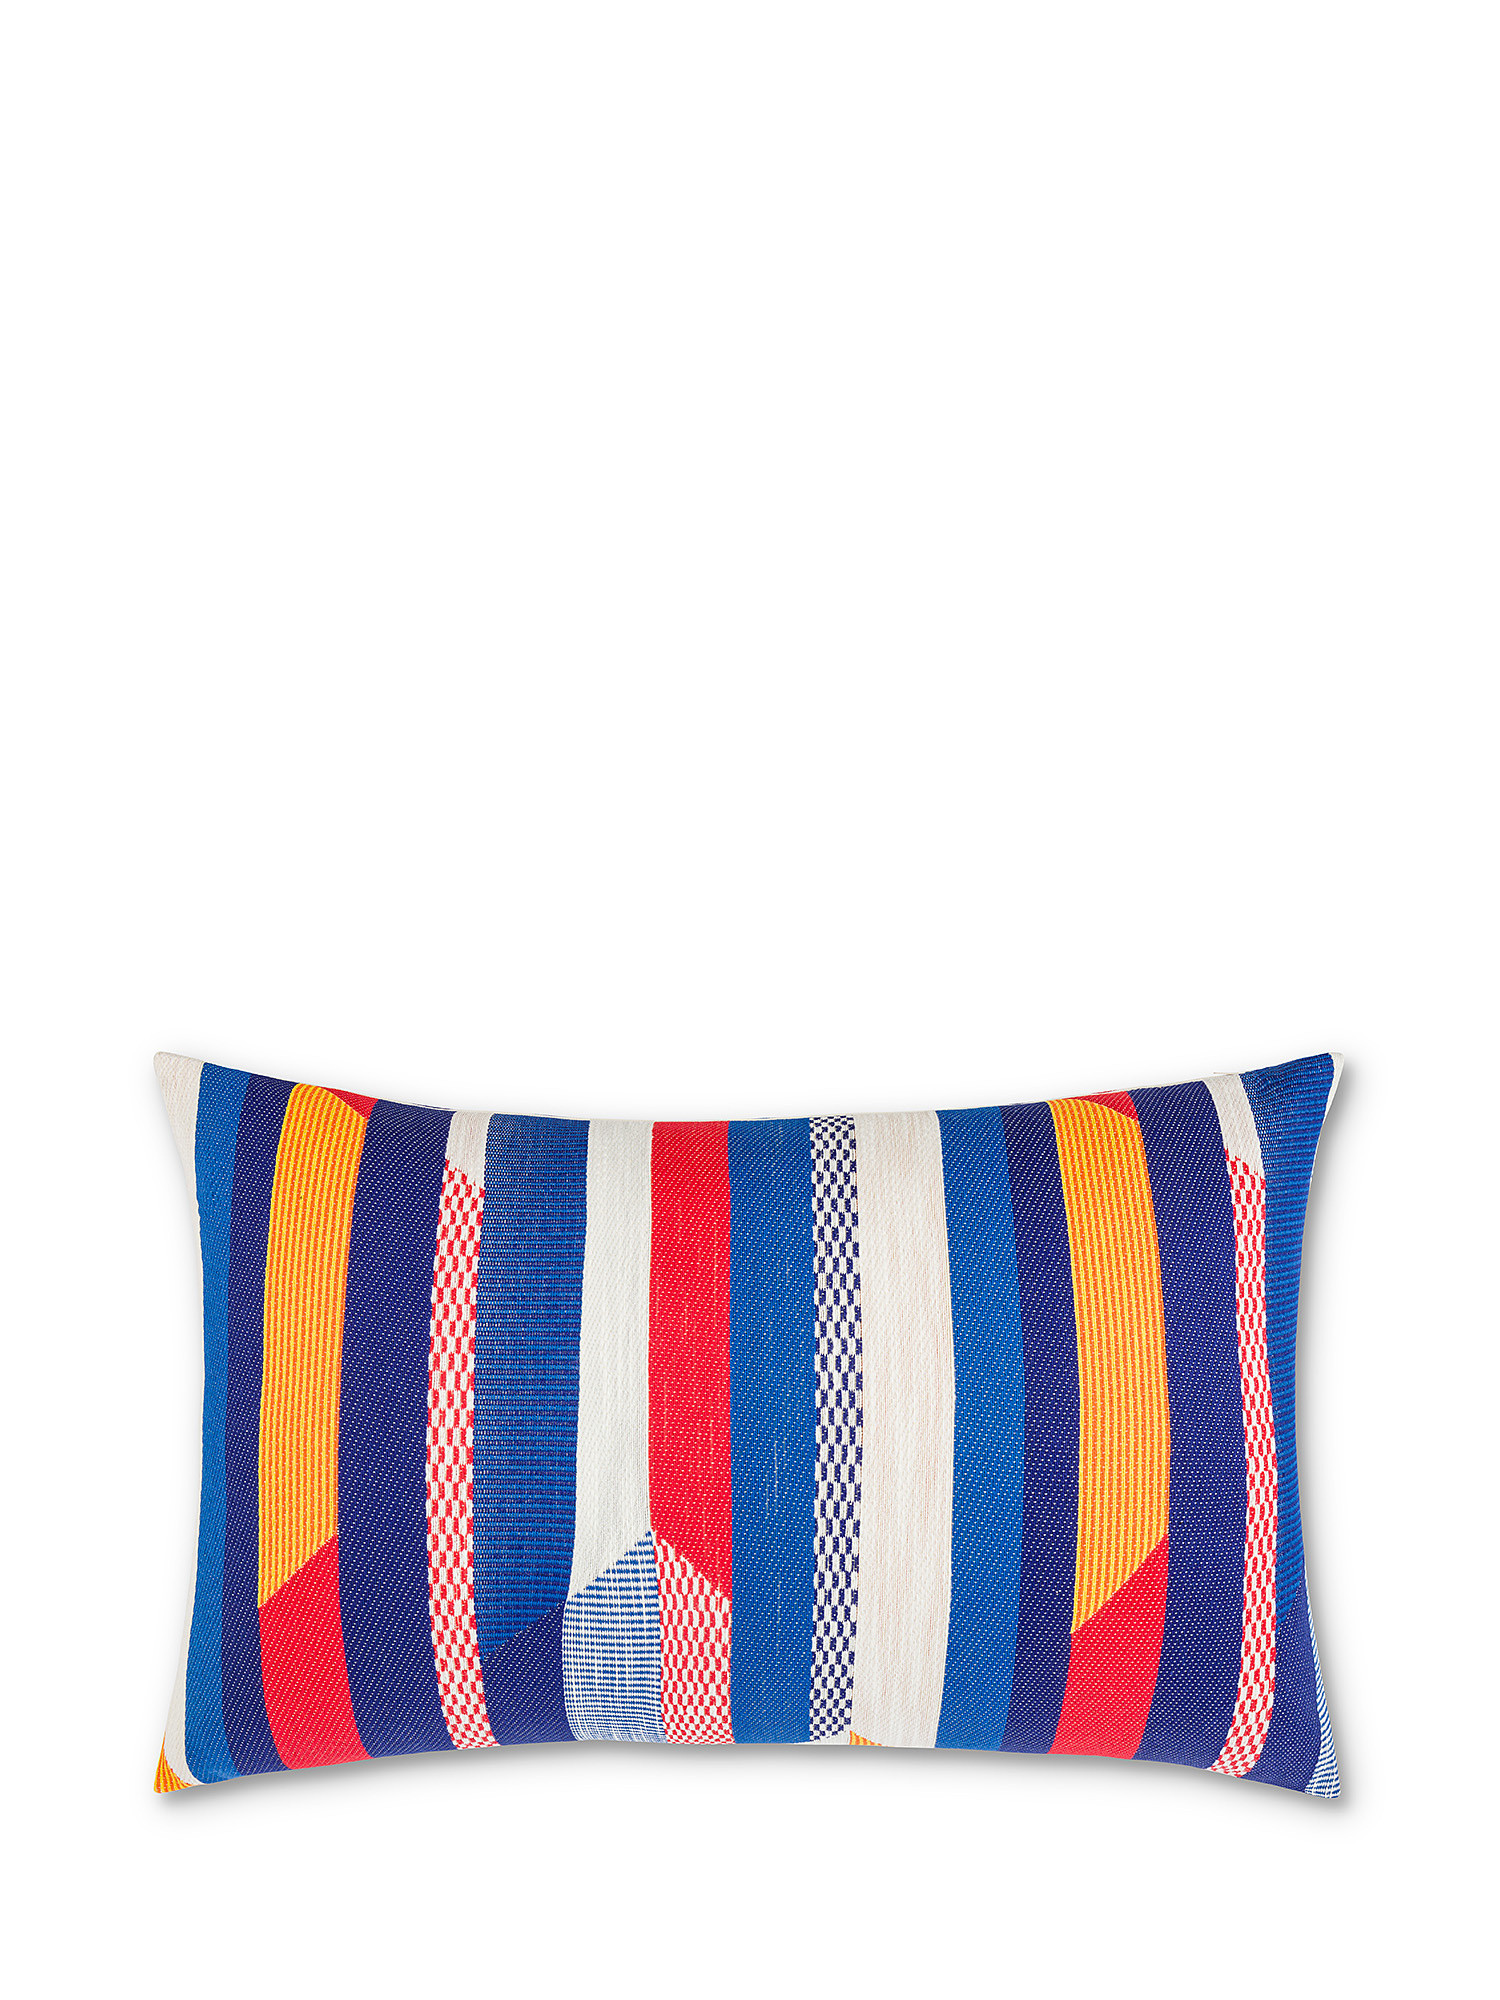 Geometric motif fabric cushion 35x55cm, Multicolor, large image number 0